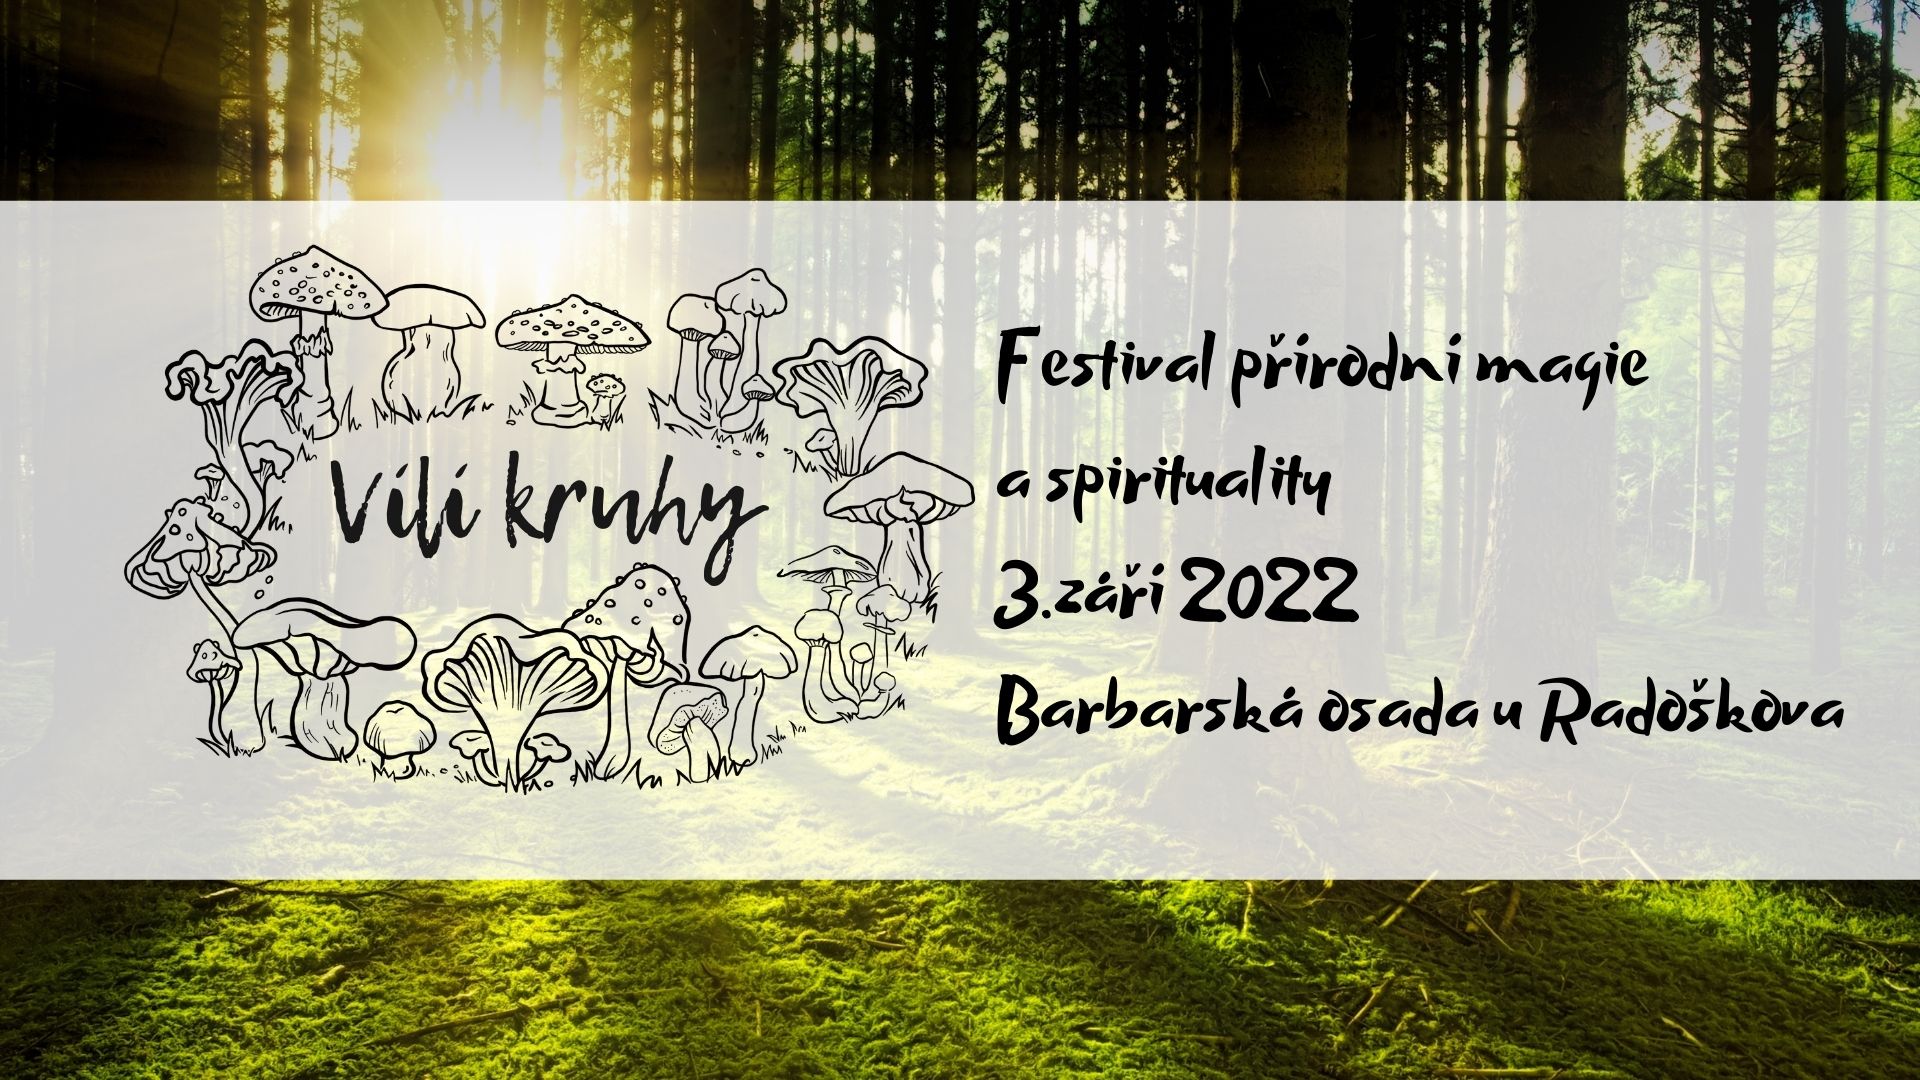 Featured image for “Festival přírodní magie a spirituality Vílí kruhy: 3.9.2022”